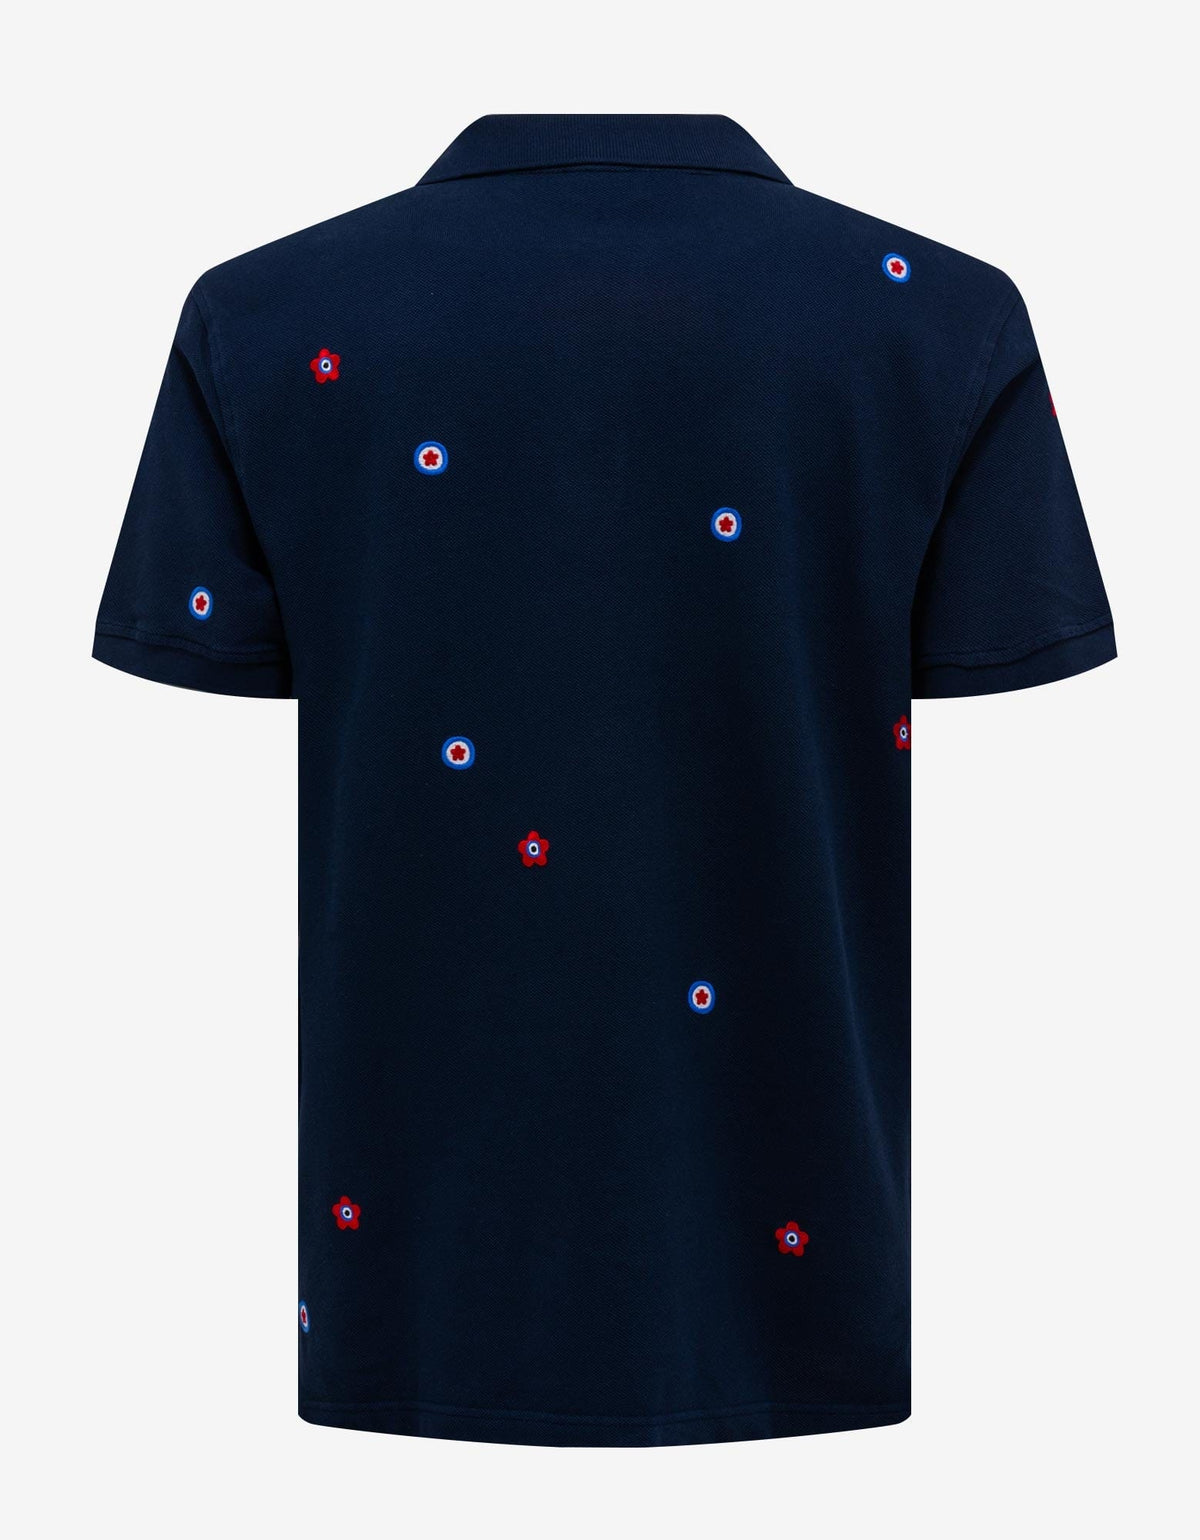 Kenzo Blue 'Kenzo Target' Embroidered Polo T-Shirt